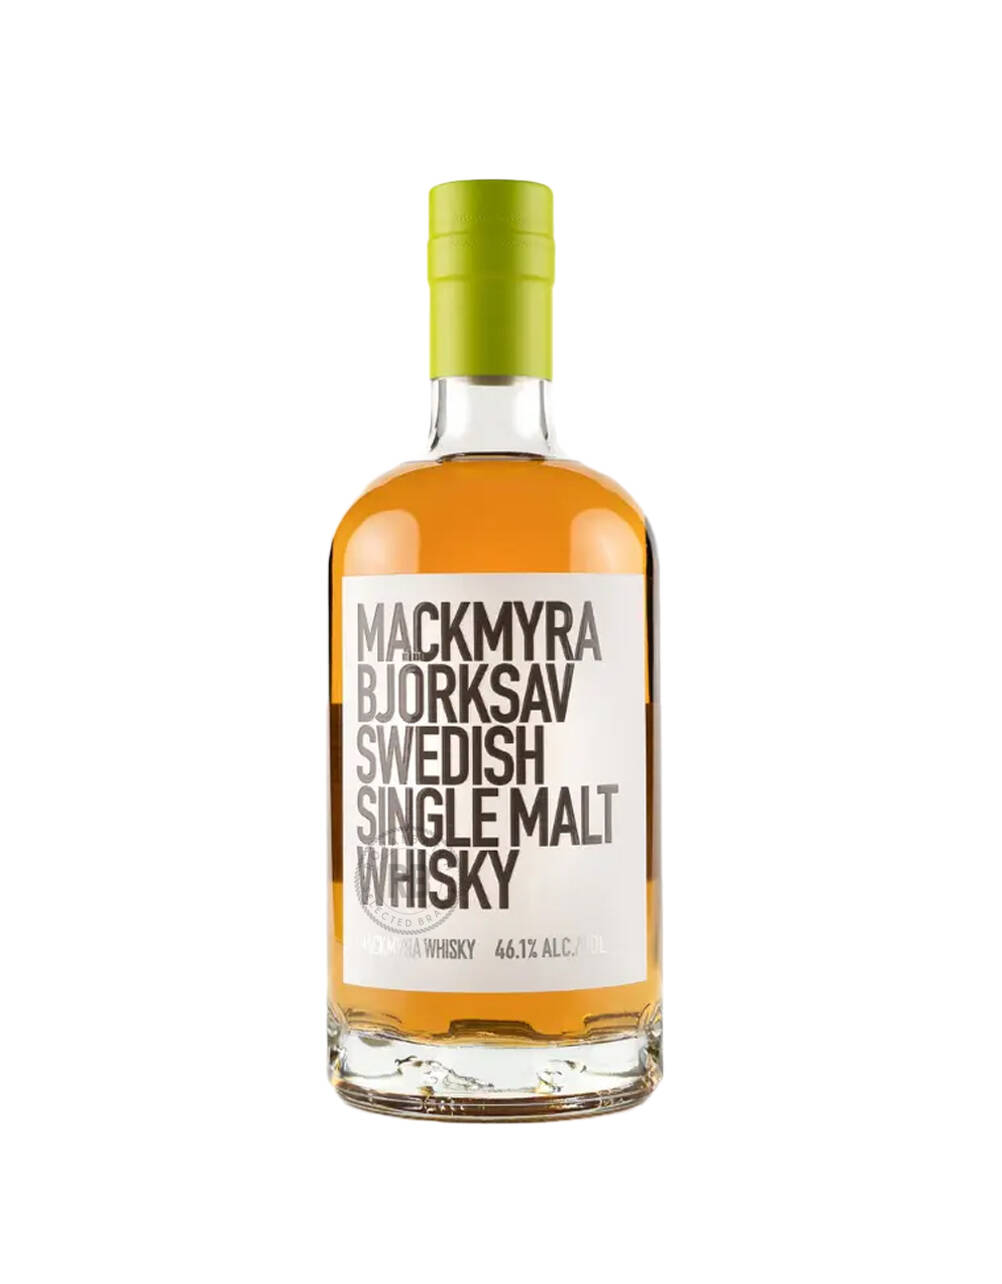 Mackmyra Bjorksav Swedish Single Malt Whisky